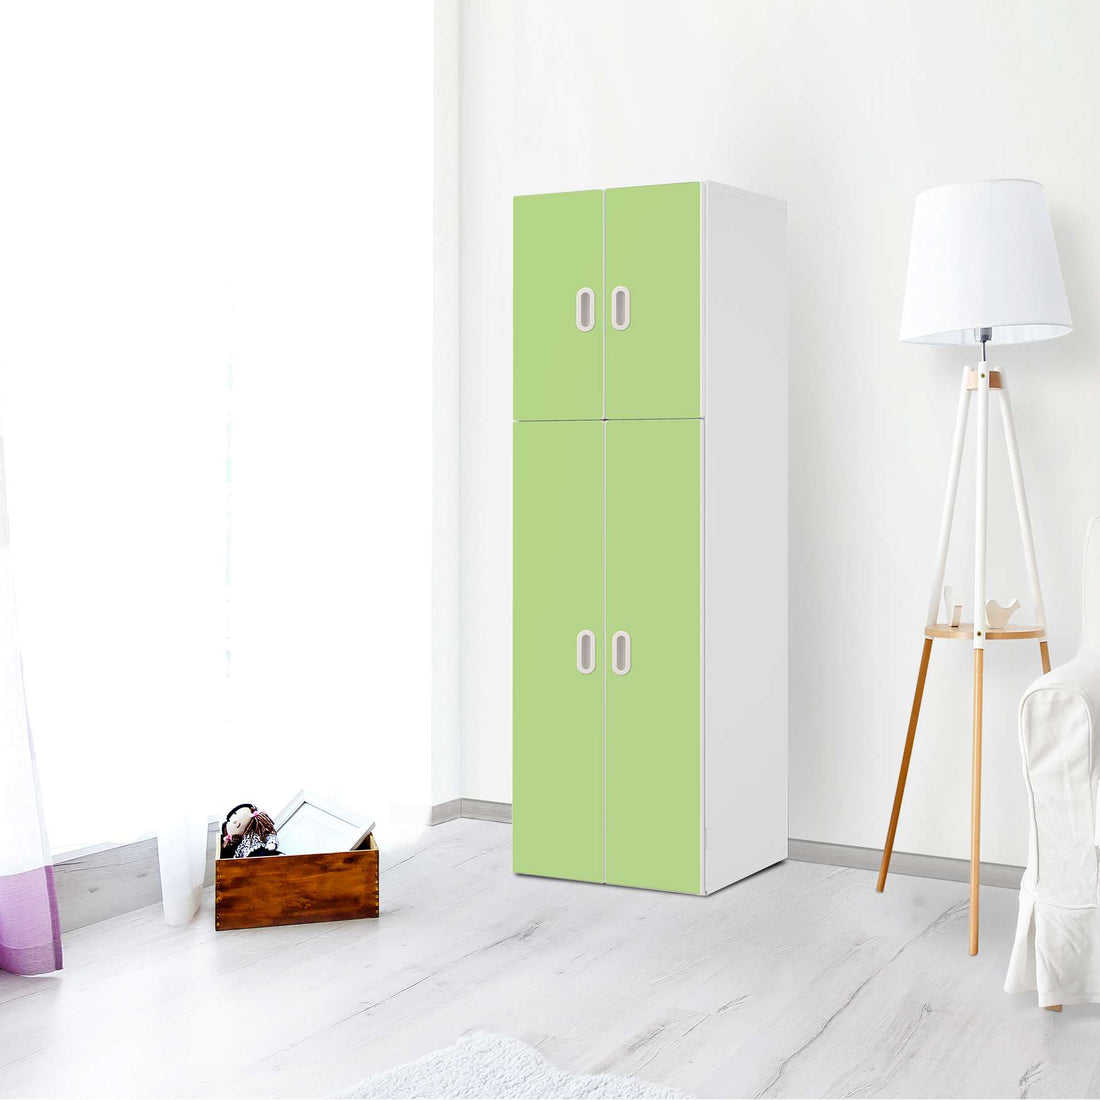 Selbstklebende Folie Hellgrün Light - IKEA Stuva / Fritids kombiniert - 2 große Türen und 2 kleine Türen - Kinderzimmer